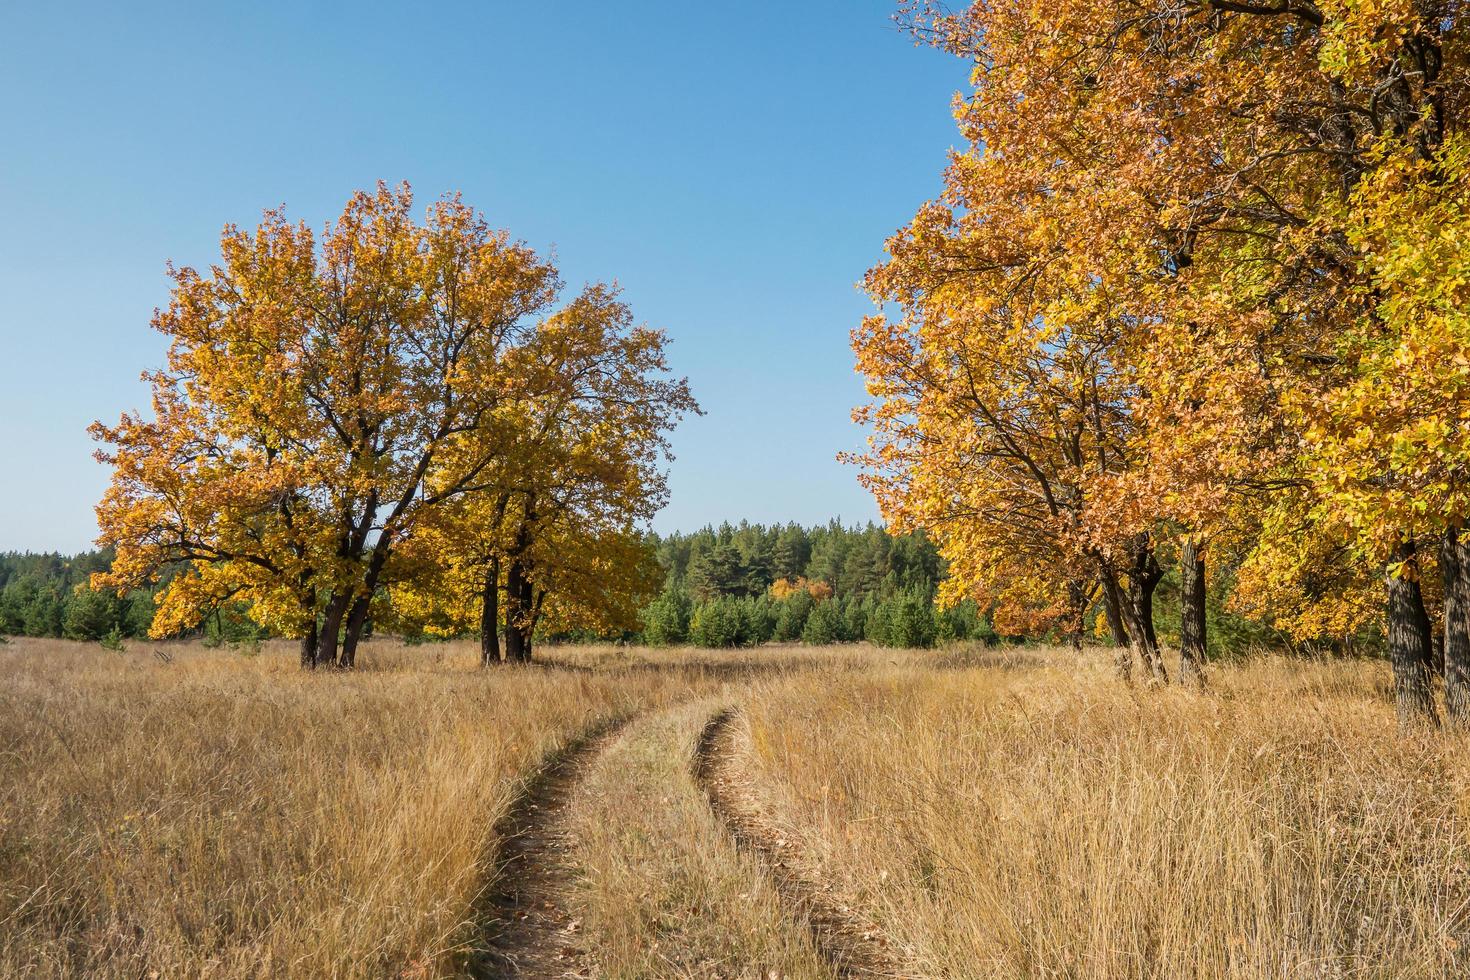 Dirt road through a field among oak trees in the autumn season. photo